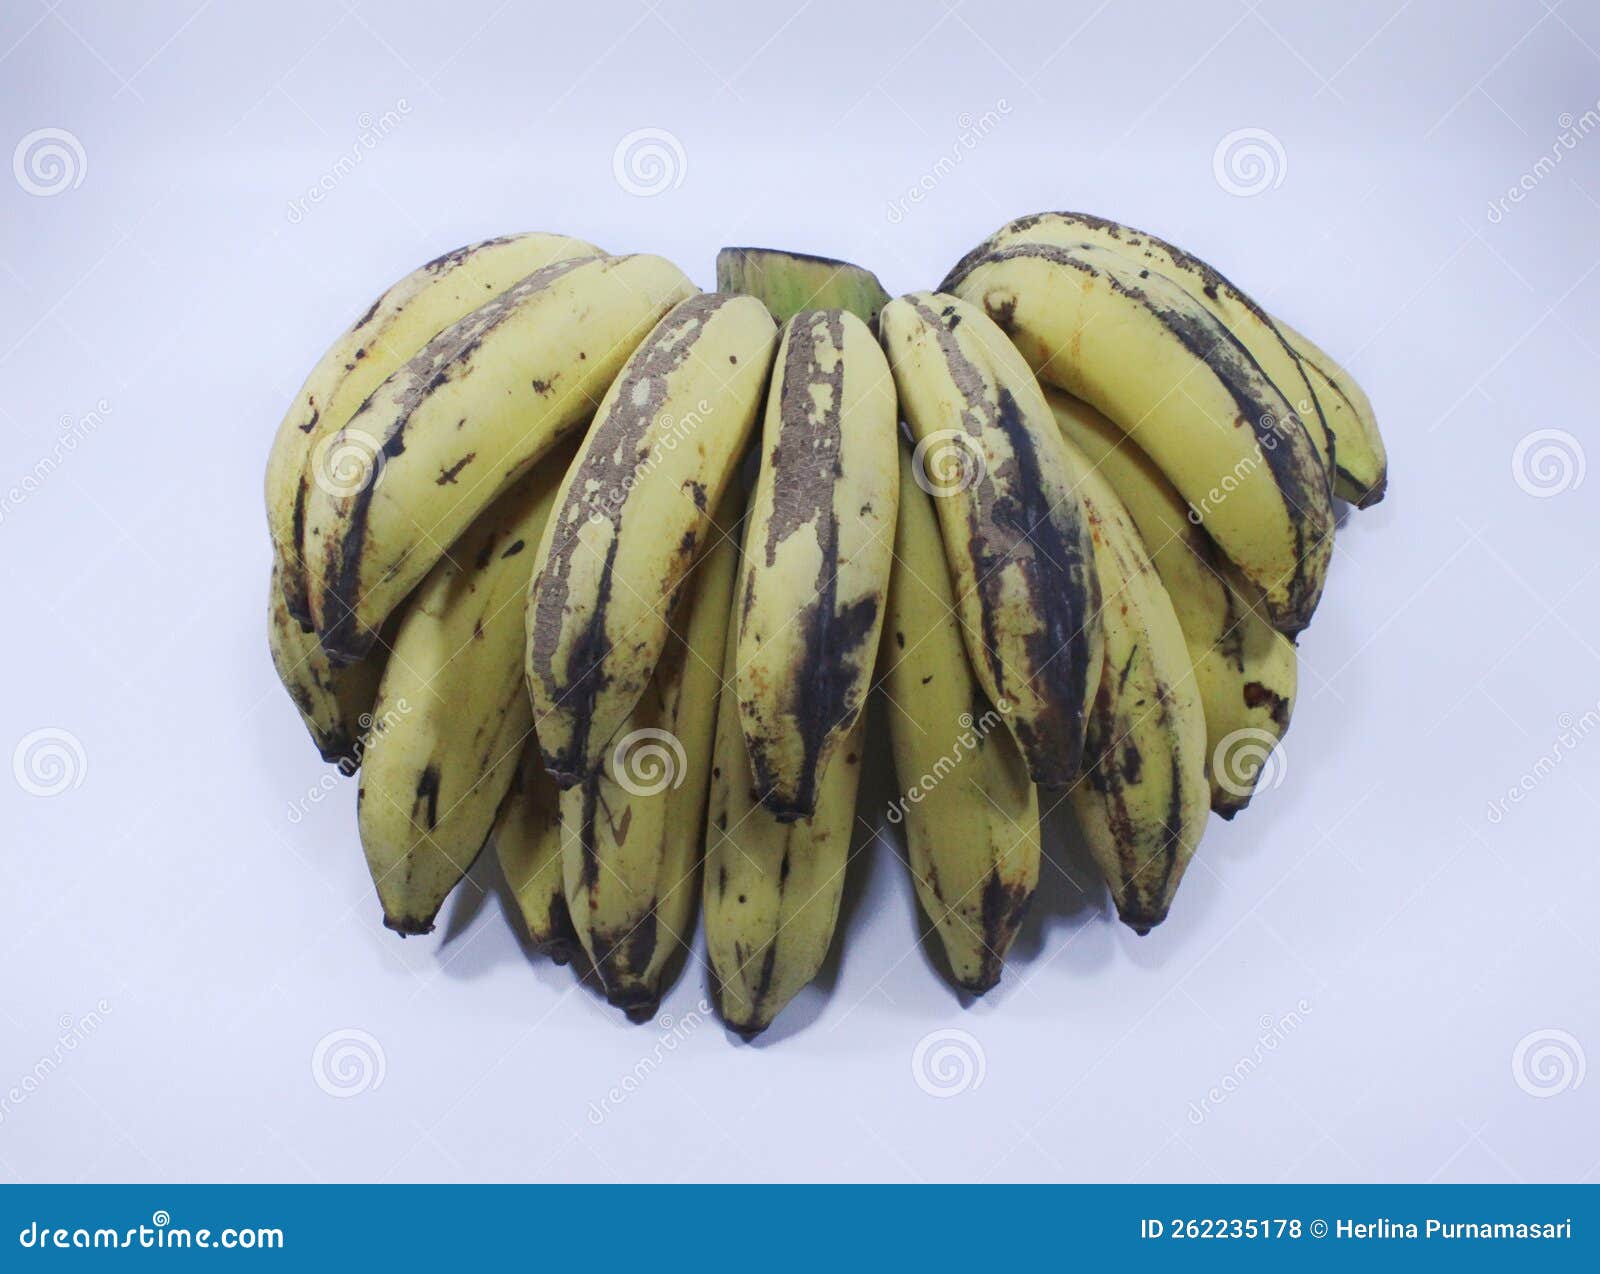 flat lay of an organic latundan banana aka tundan, silk banana, pisang raja sereh, manzana banana, or apple banana